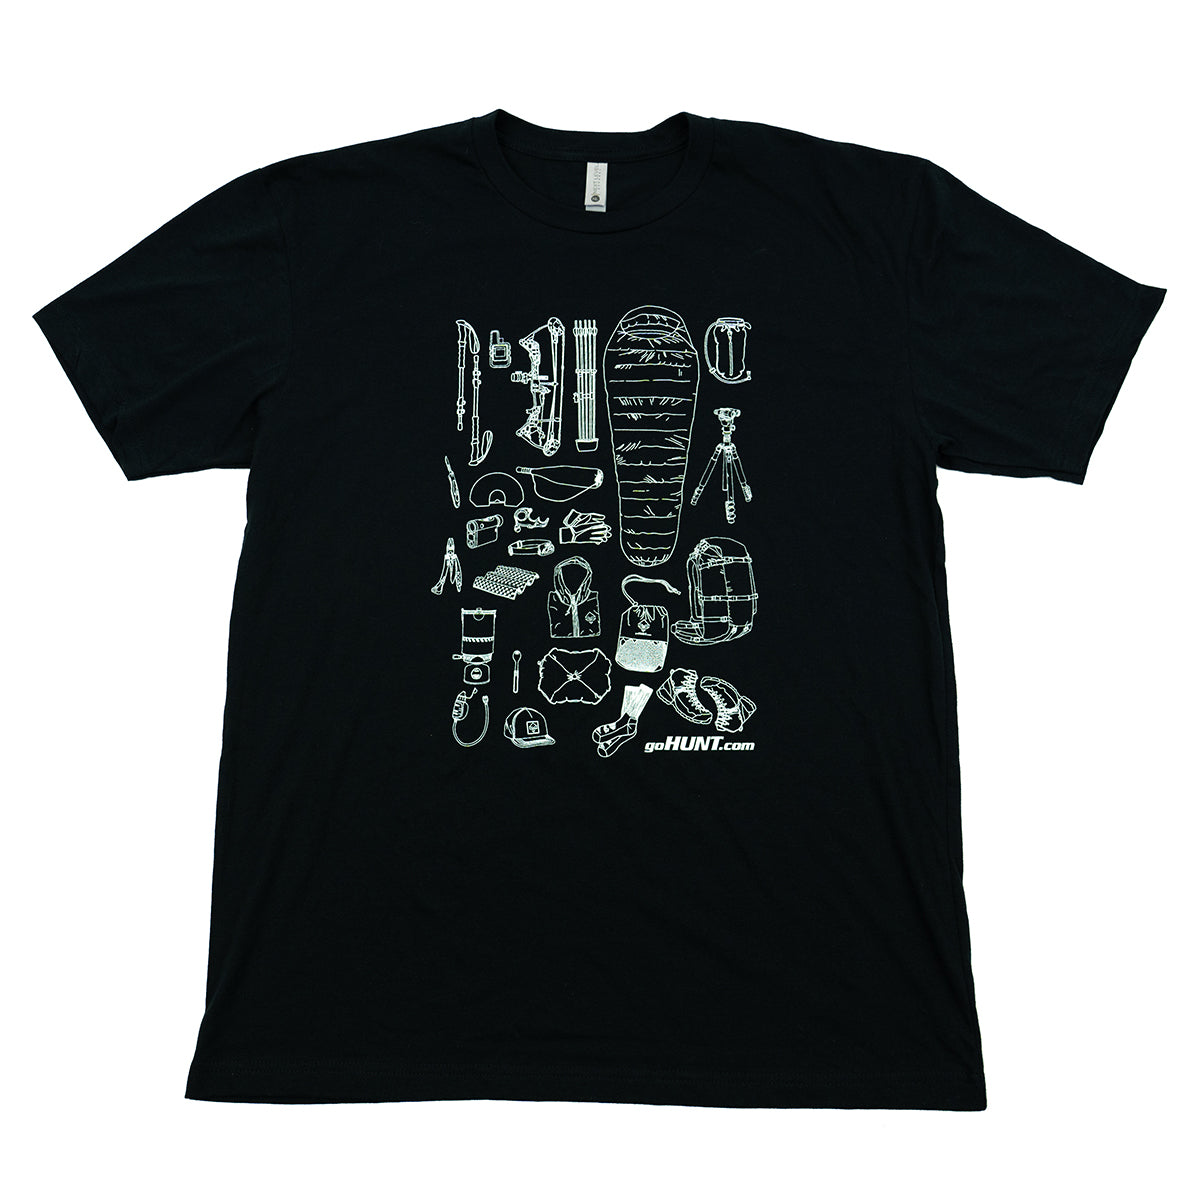 GOHUNT Early Season Gear T-Shirt in goHUNT Early Season Gear T-Shirt by goHUNT | Apparel - goHUNT Shop by GOHUNT | GOHUNT - GOHUNT Shop